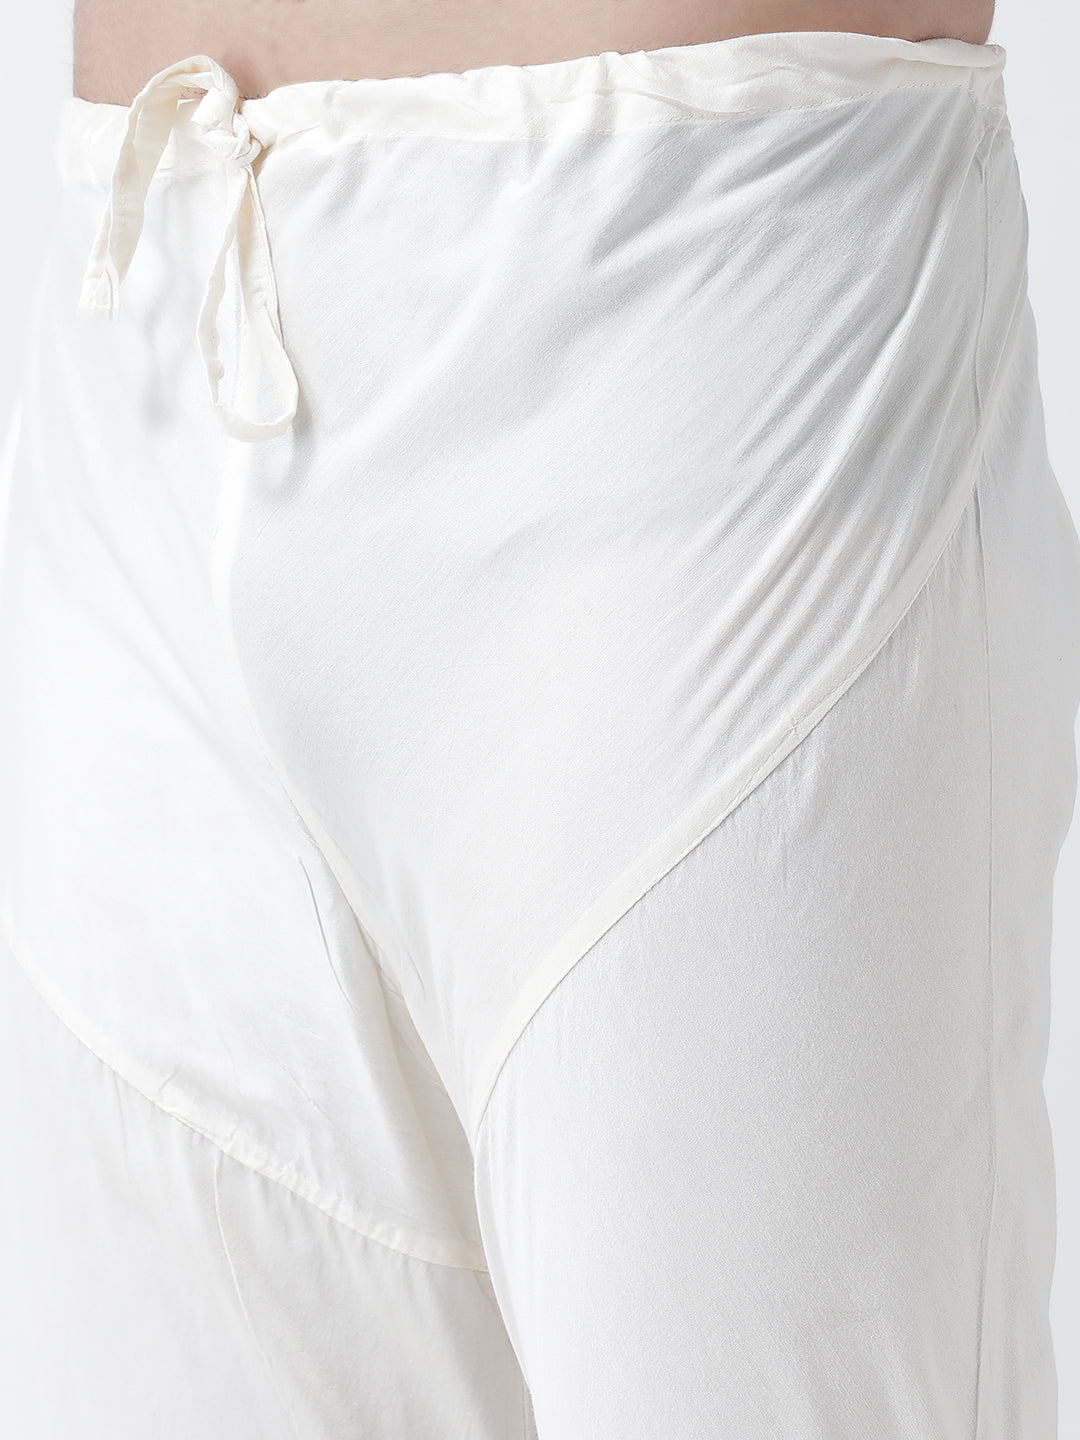 Buy PK HUB® Men's Loose Fit Soft Cotton Saada Pajama (White, Free Size) at  Amazon.in